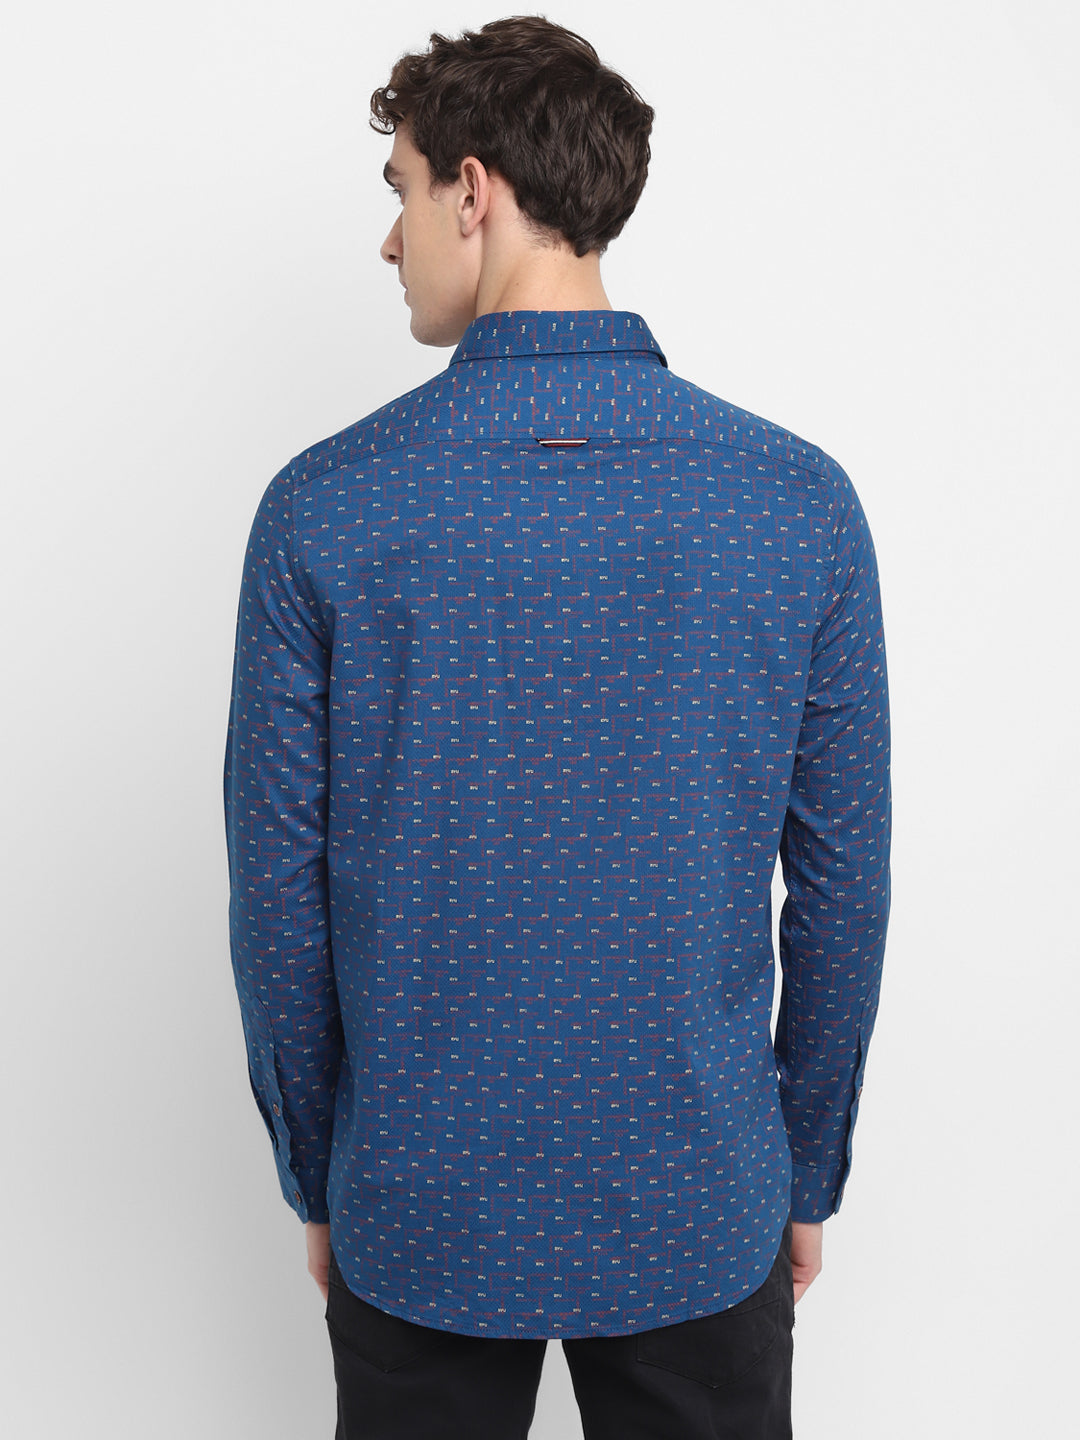 Printed Blue Slim Fit Causal Shirt